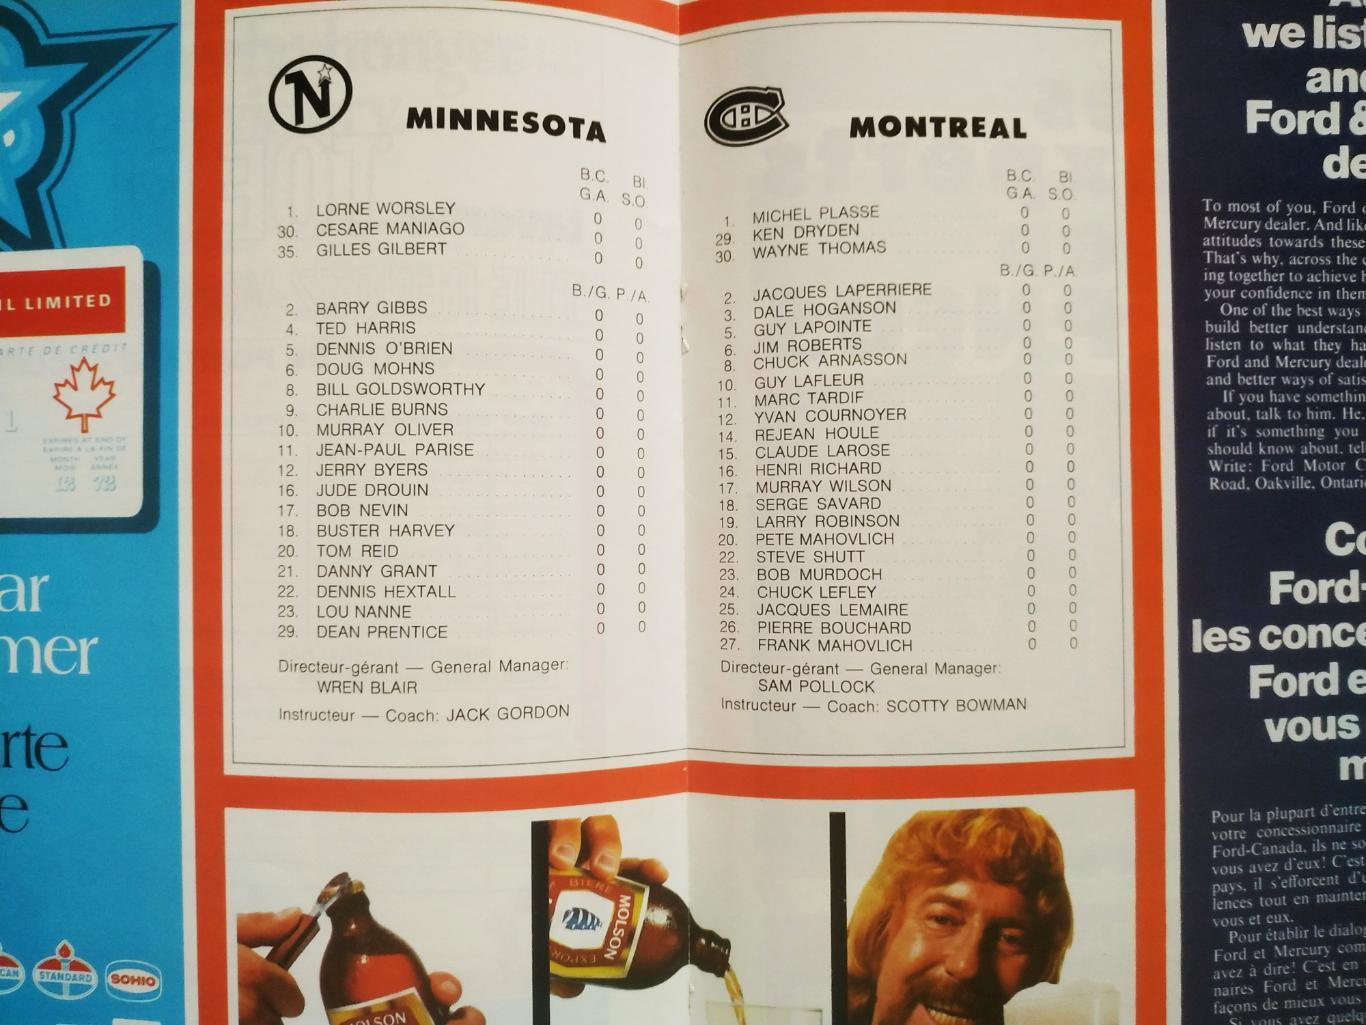 ХОККЕЙ ПРОГРАММА МАТЧА НХЛ NHL 1972 OCT.7 MINNESOTA VS. MONTREAL PROGRAM GAME 4